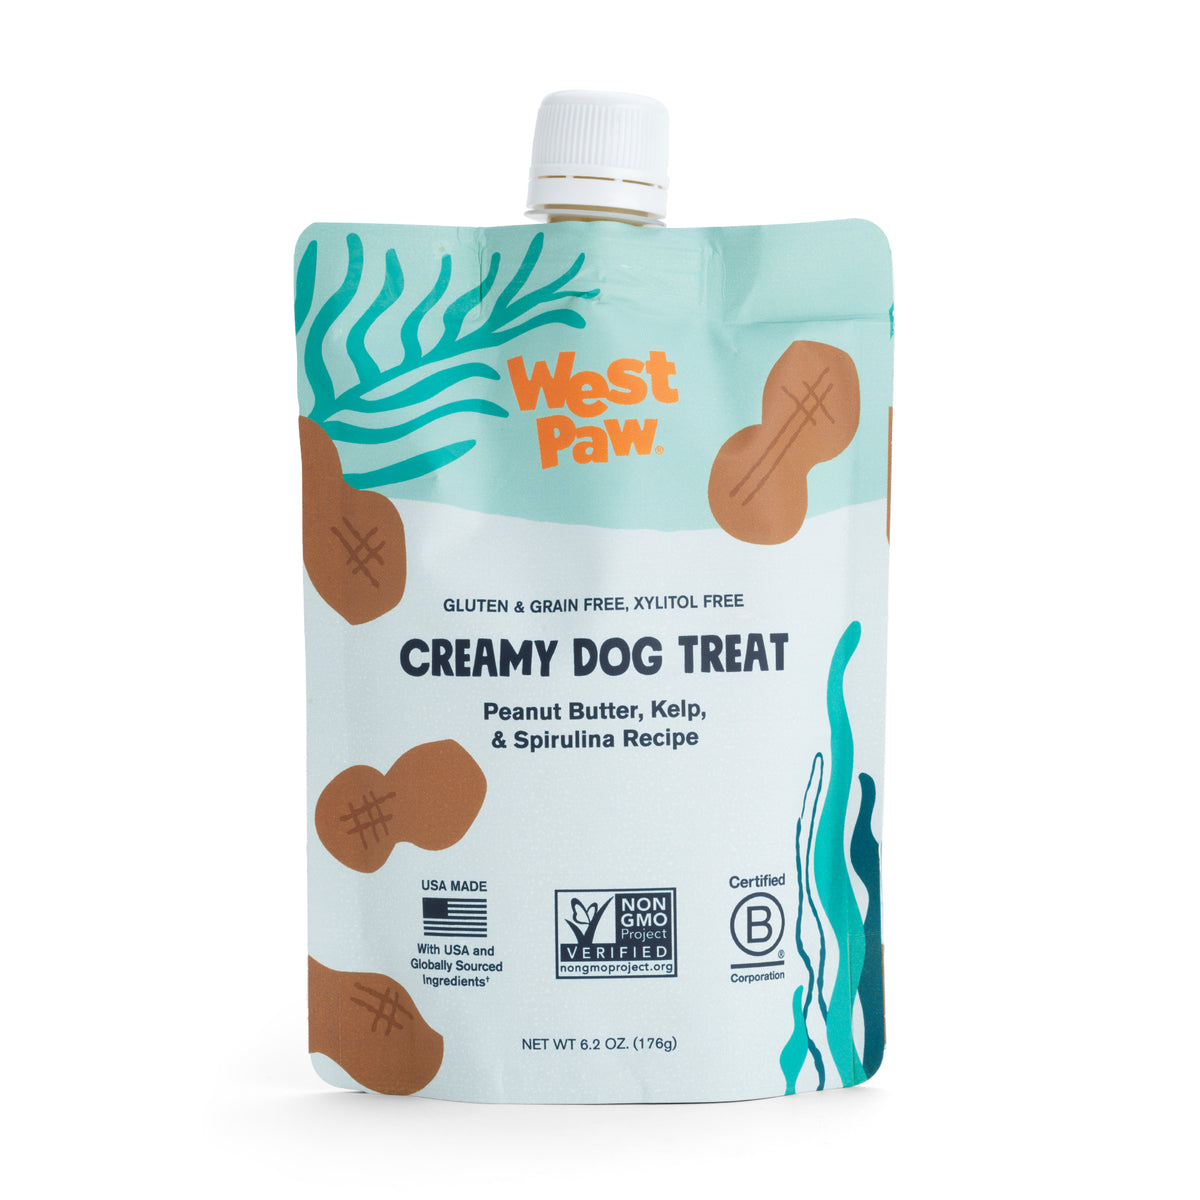 Peanut Butter, Kelp & Spirulina Creamy Dog Treat